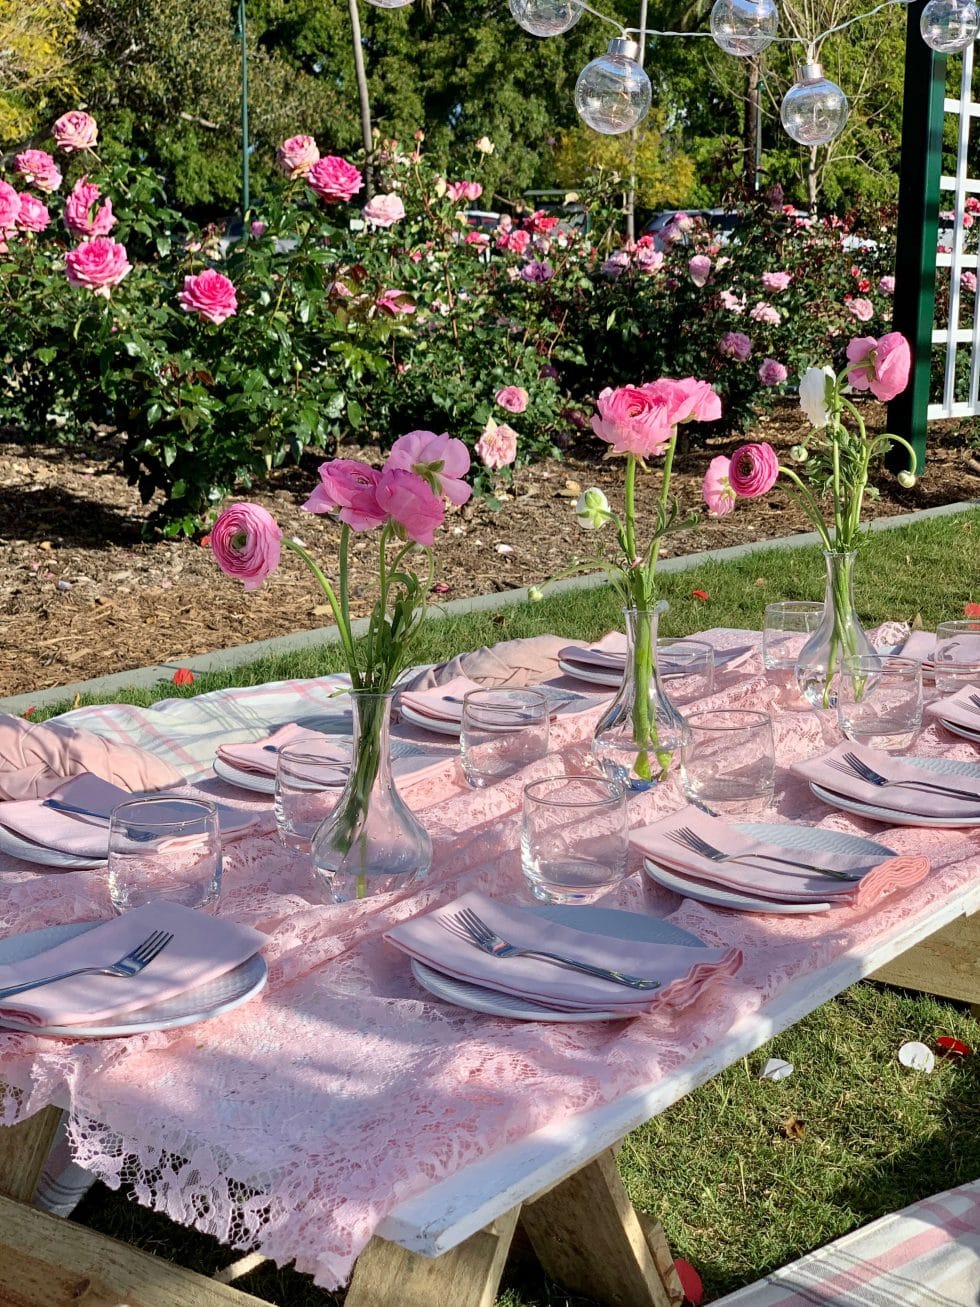 Pretty in pink picnic package | Lady Brisbane: Brisbane Picnics and News